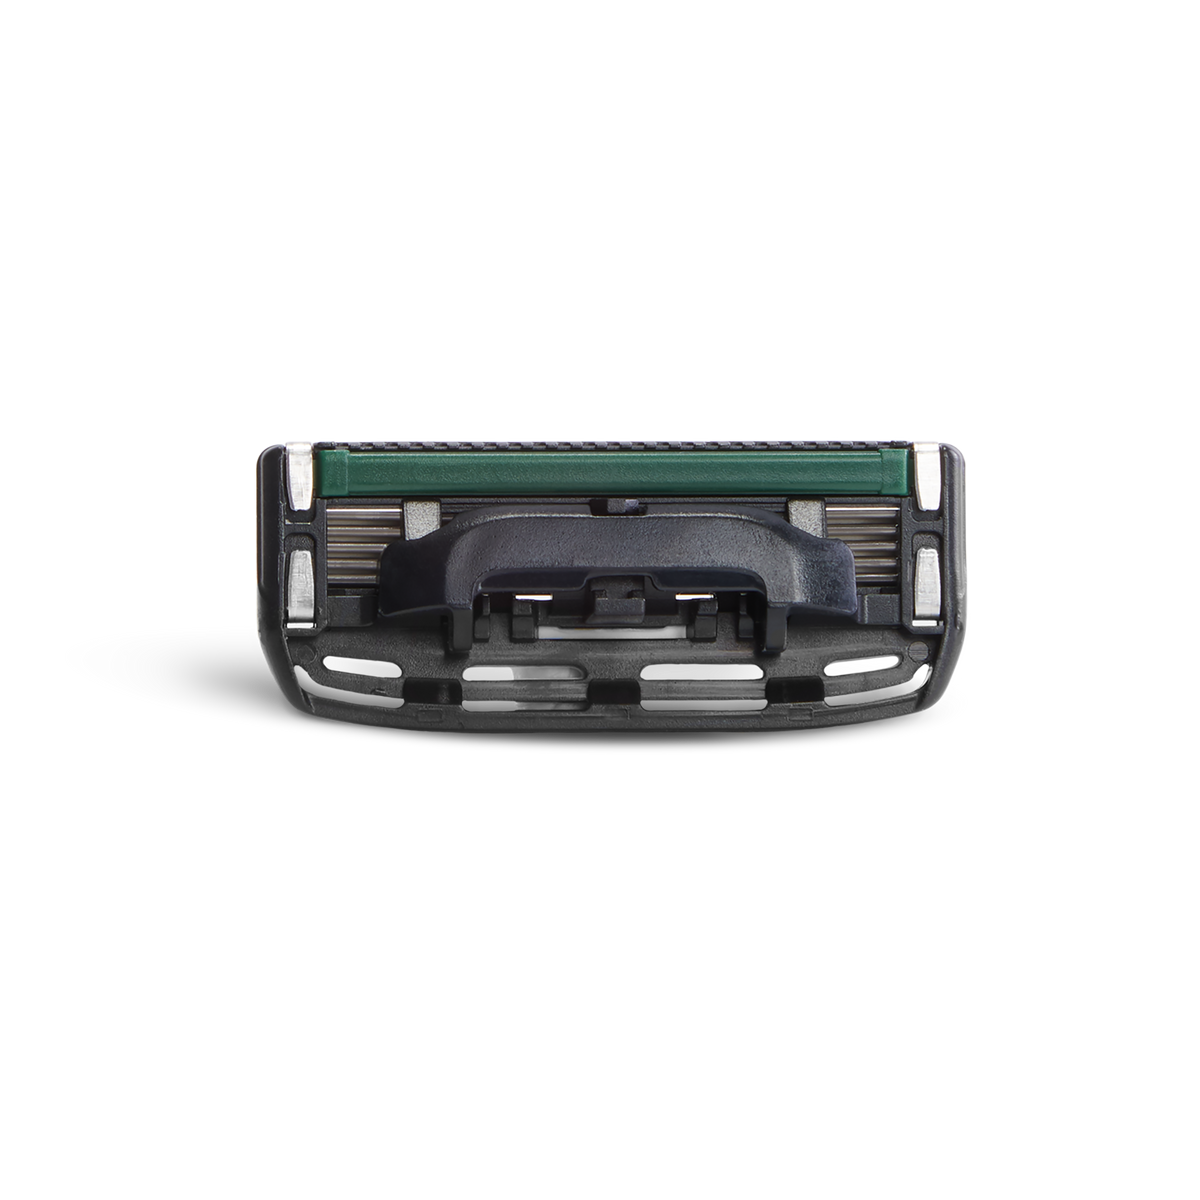 Product photo, razor cartridge detail, top view